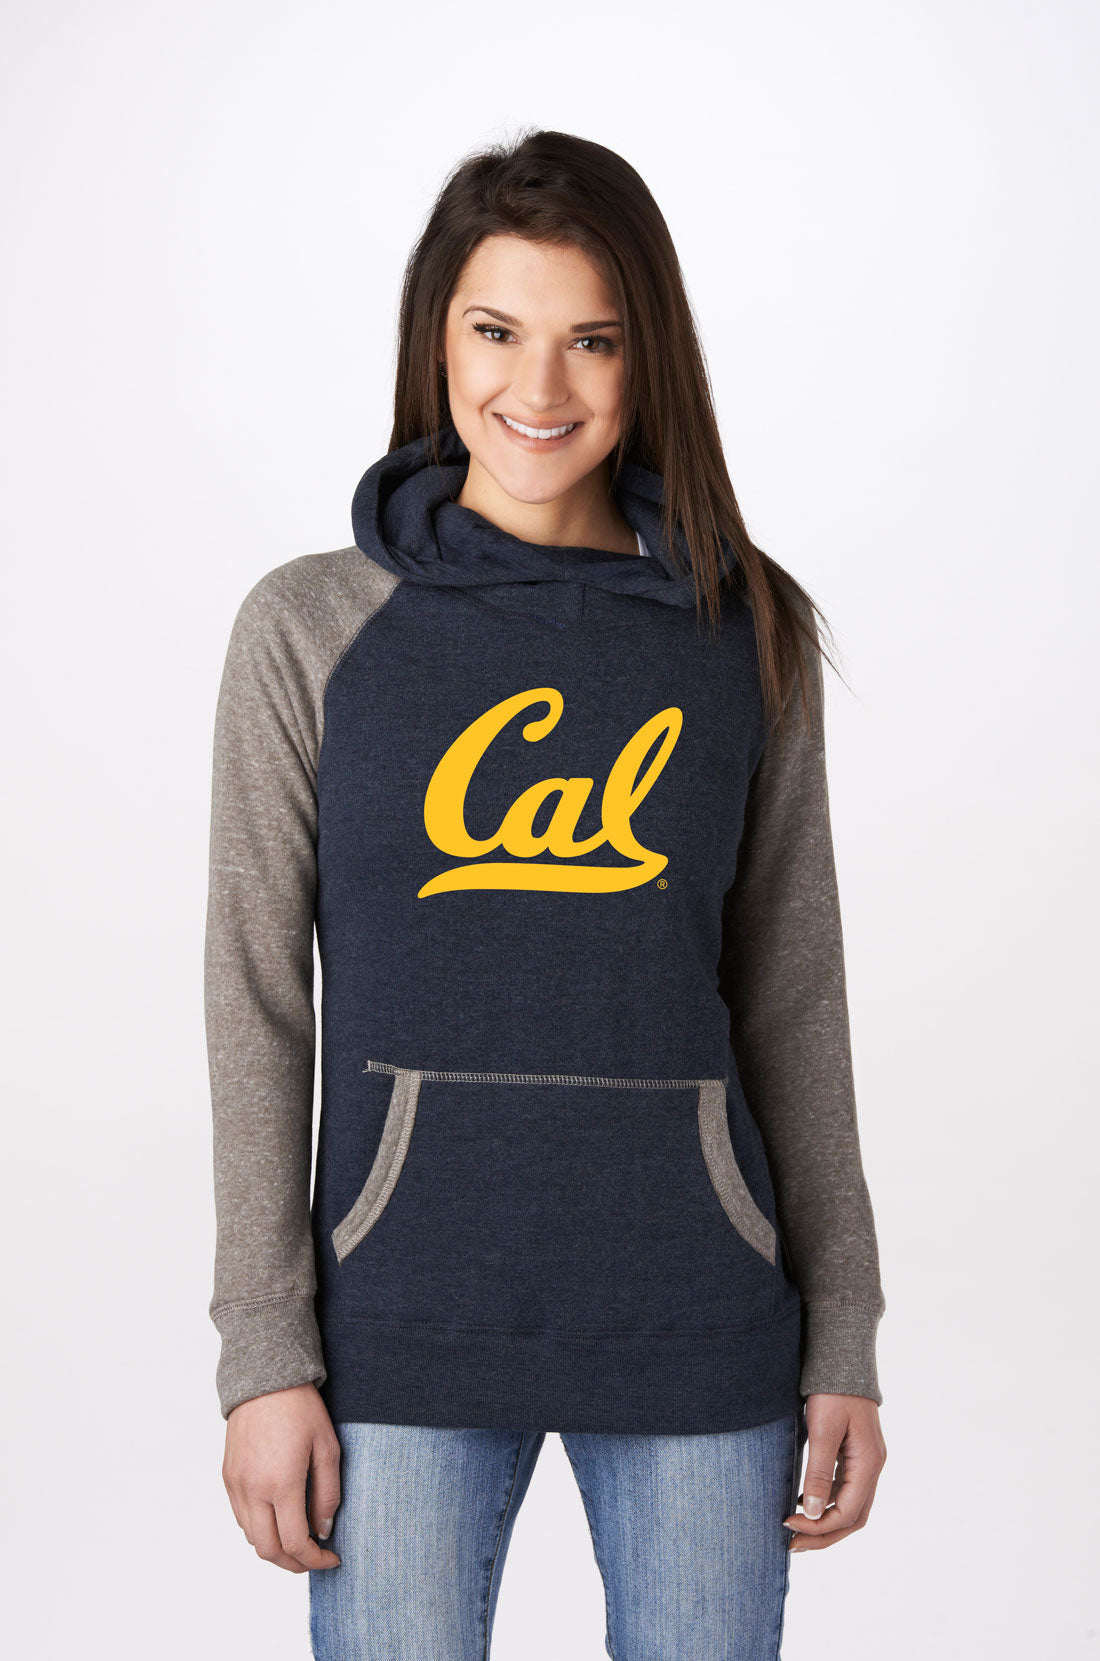 U.C. Berkeley Cal Embroidered Campus Crew Women's Tri Blend Hoodie Sweatshirt-Navy Blue-Shop College Wear